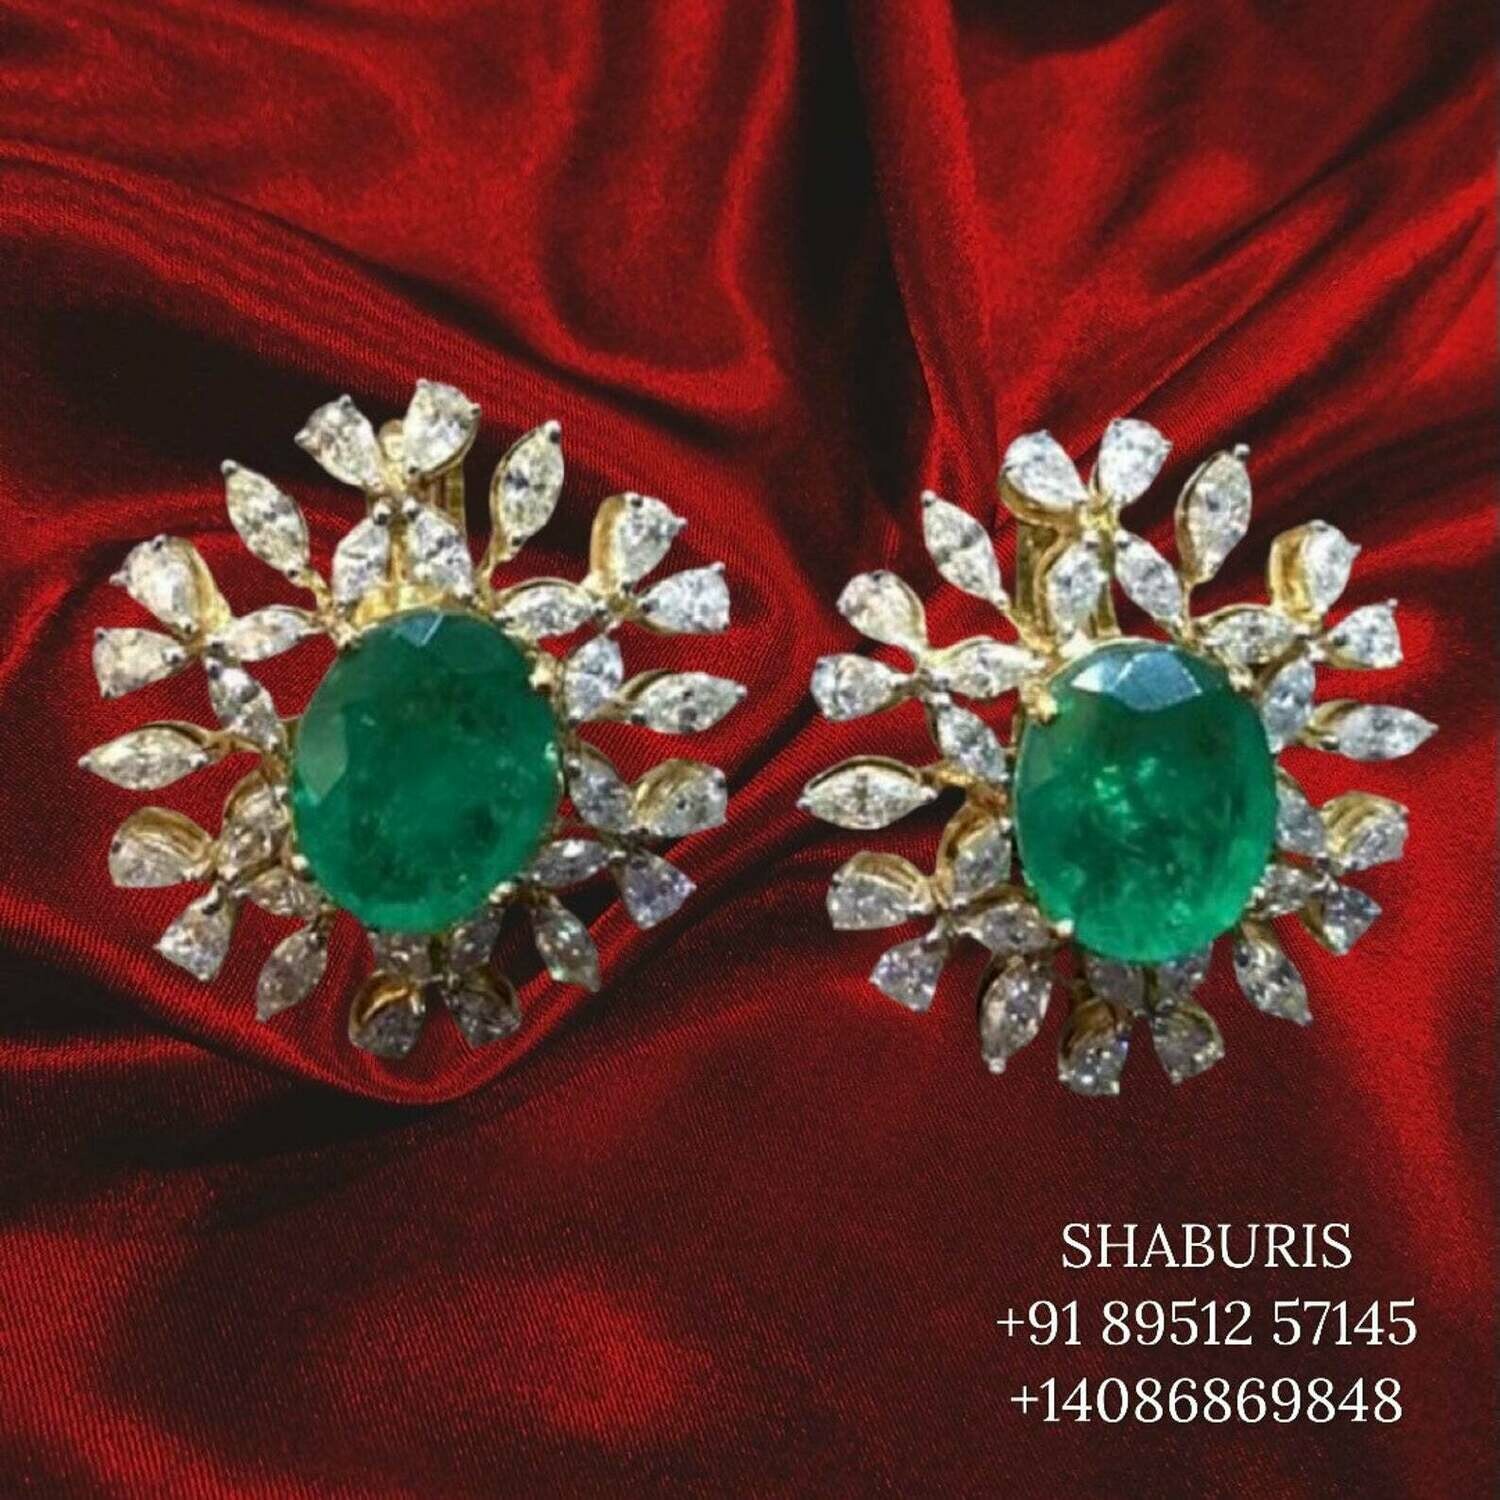 Latest Indian Jewelry,South Indian Jewellery,Pure silver diamond jhumka,South Indian Jewelry designs -SHABURIS